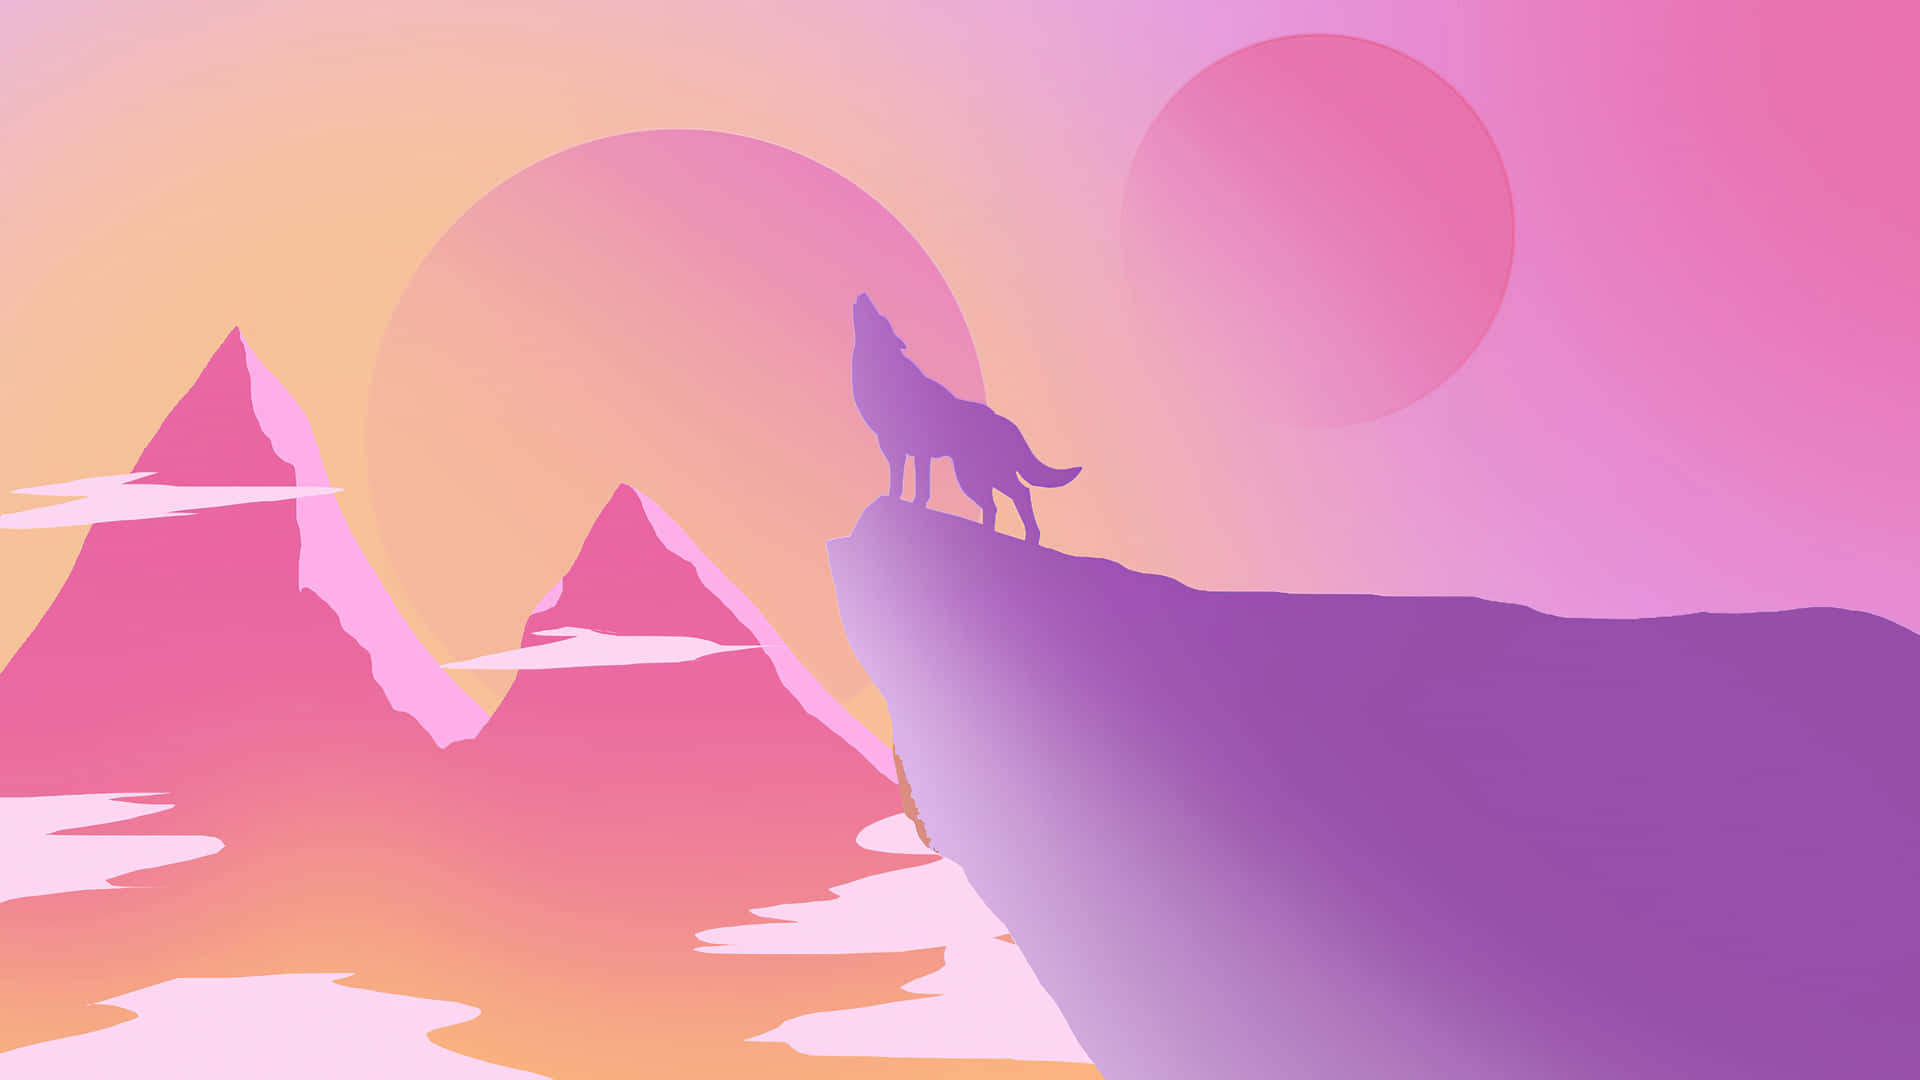 Majestic Lone Wolf in the Wilderness Wallpaper